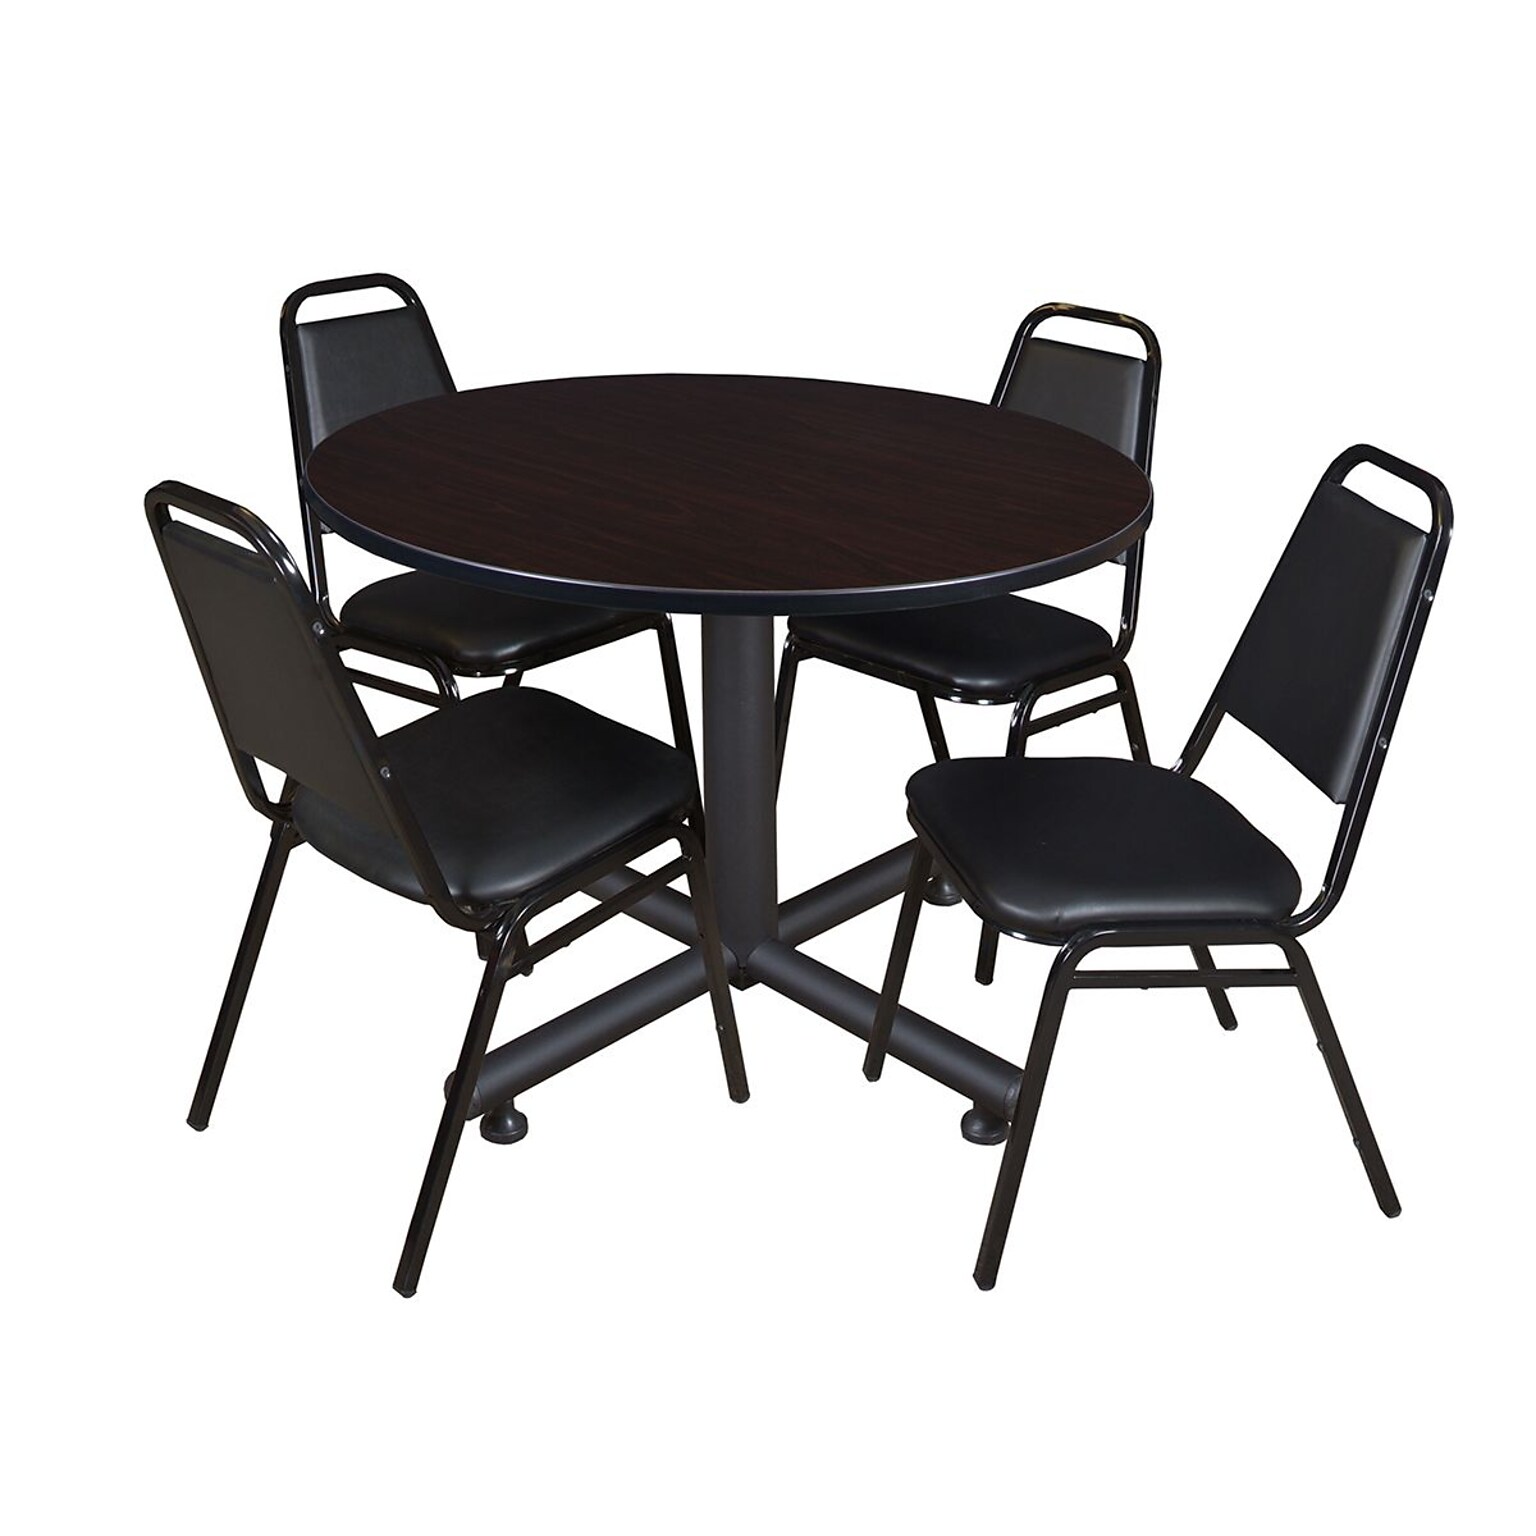 Regency 48in Laminate Round Table with 4 Restaurant Stack Chairs, Mocha/Walnut (TKB48RNDMW29)